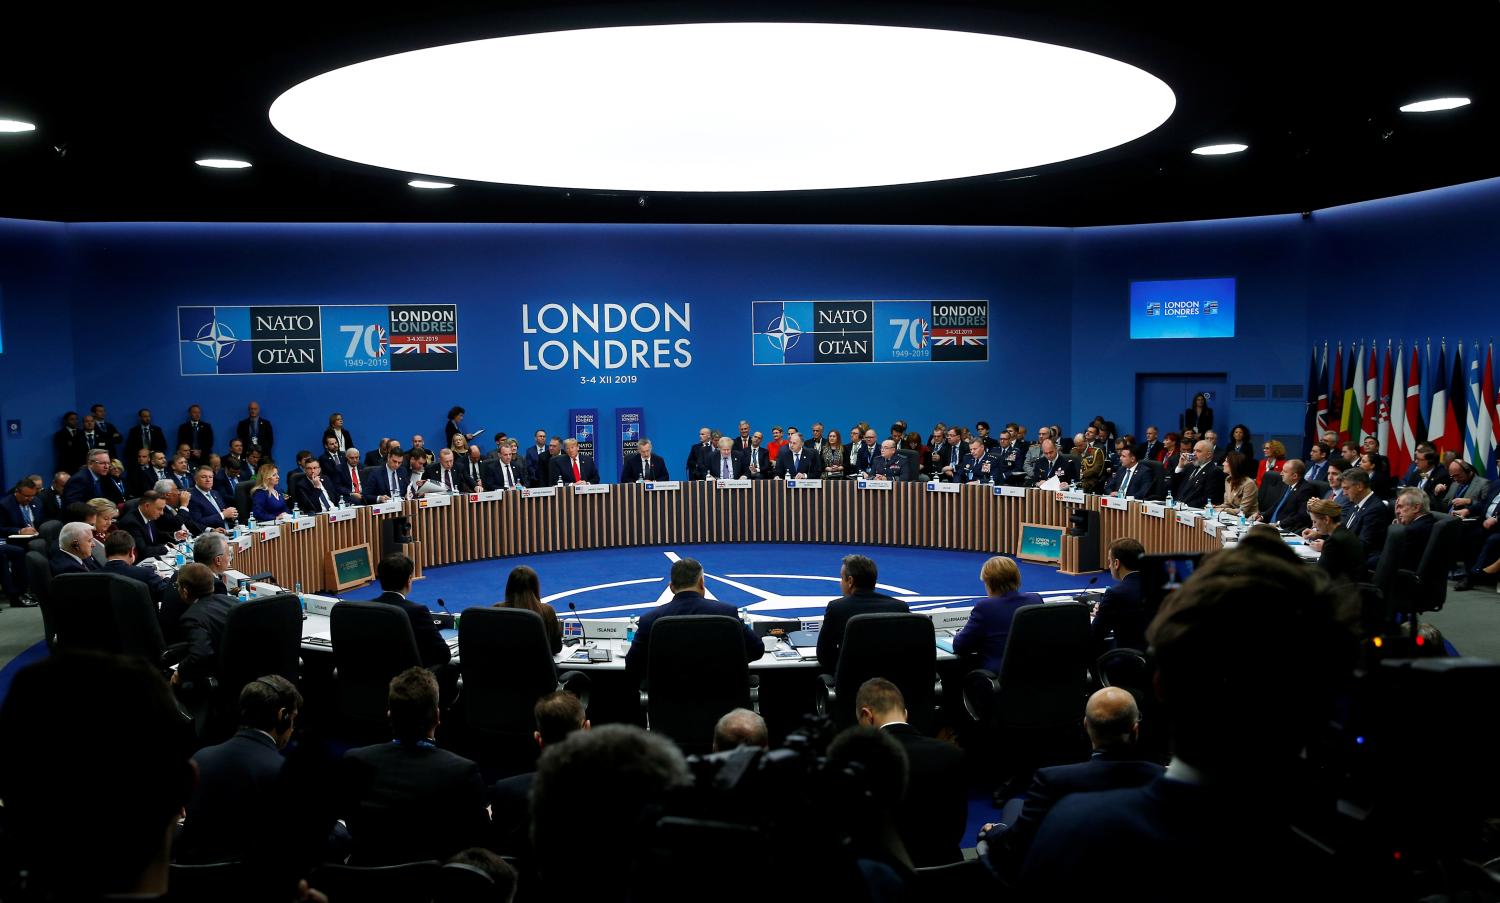 General view during the NATO summit in Watford, Britain December 4, 2019. REUTERS/Peter Nicholls